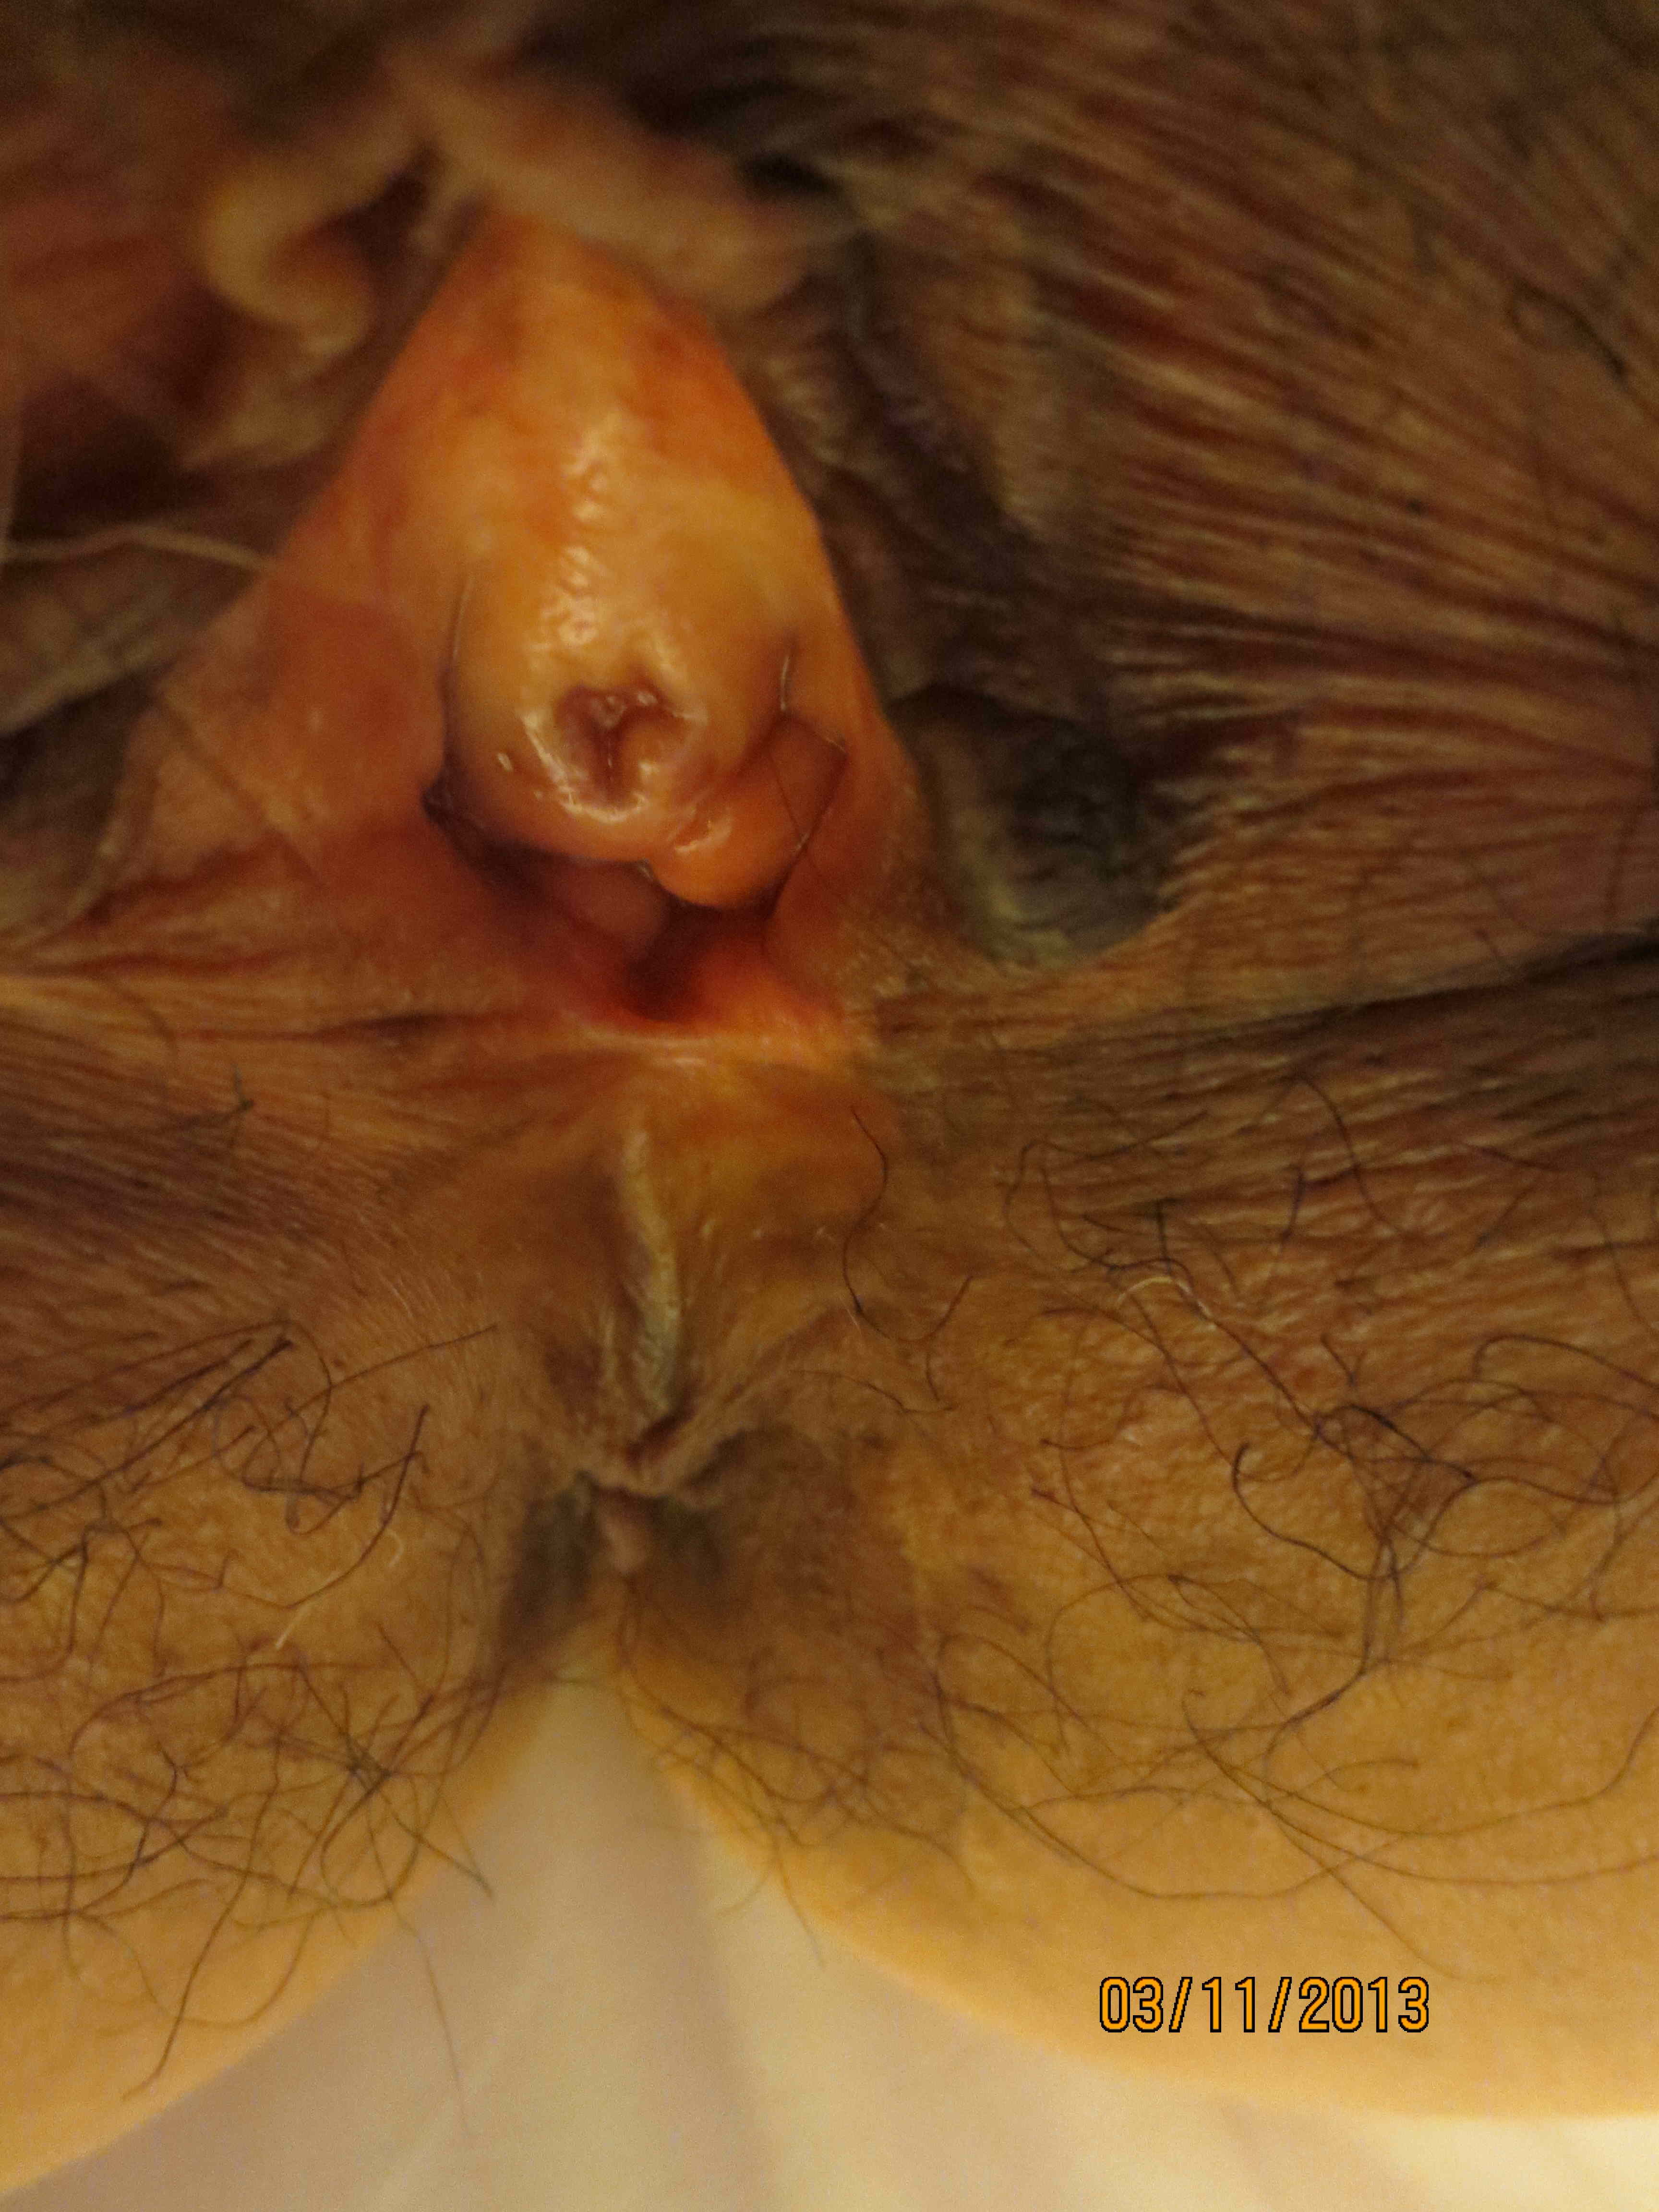 fleshlight filled pussy close up on yuvutu homemade amateur porn 1 image